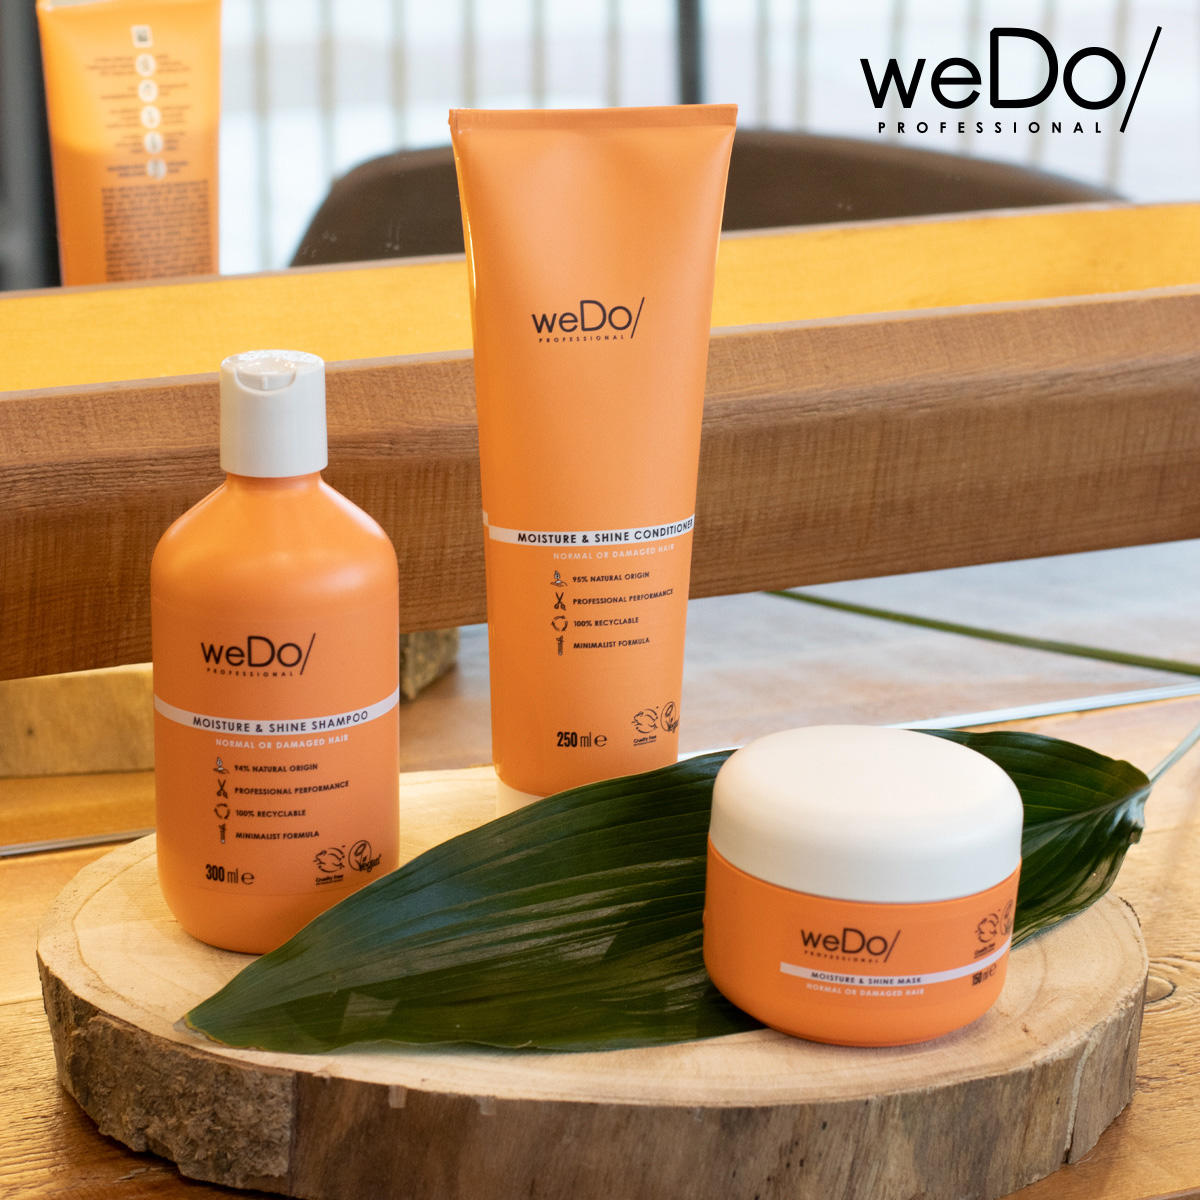 weDo/ Moisture & Shine Shampoo 100 ml - 7